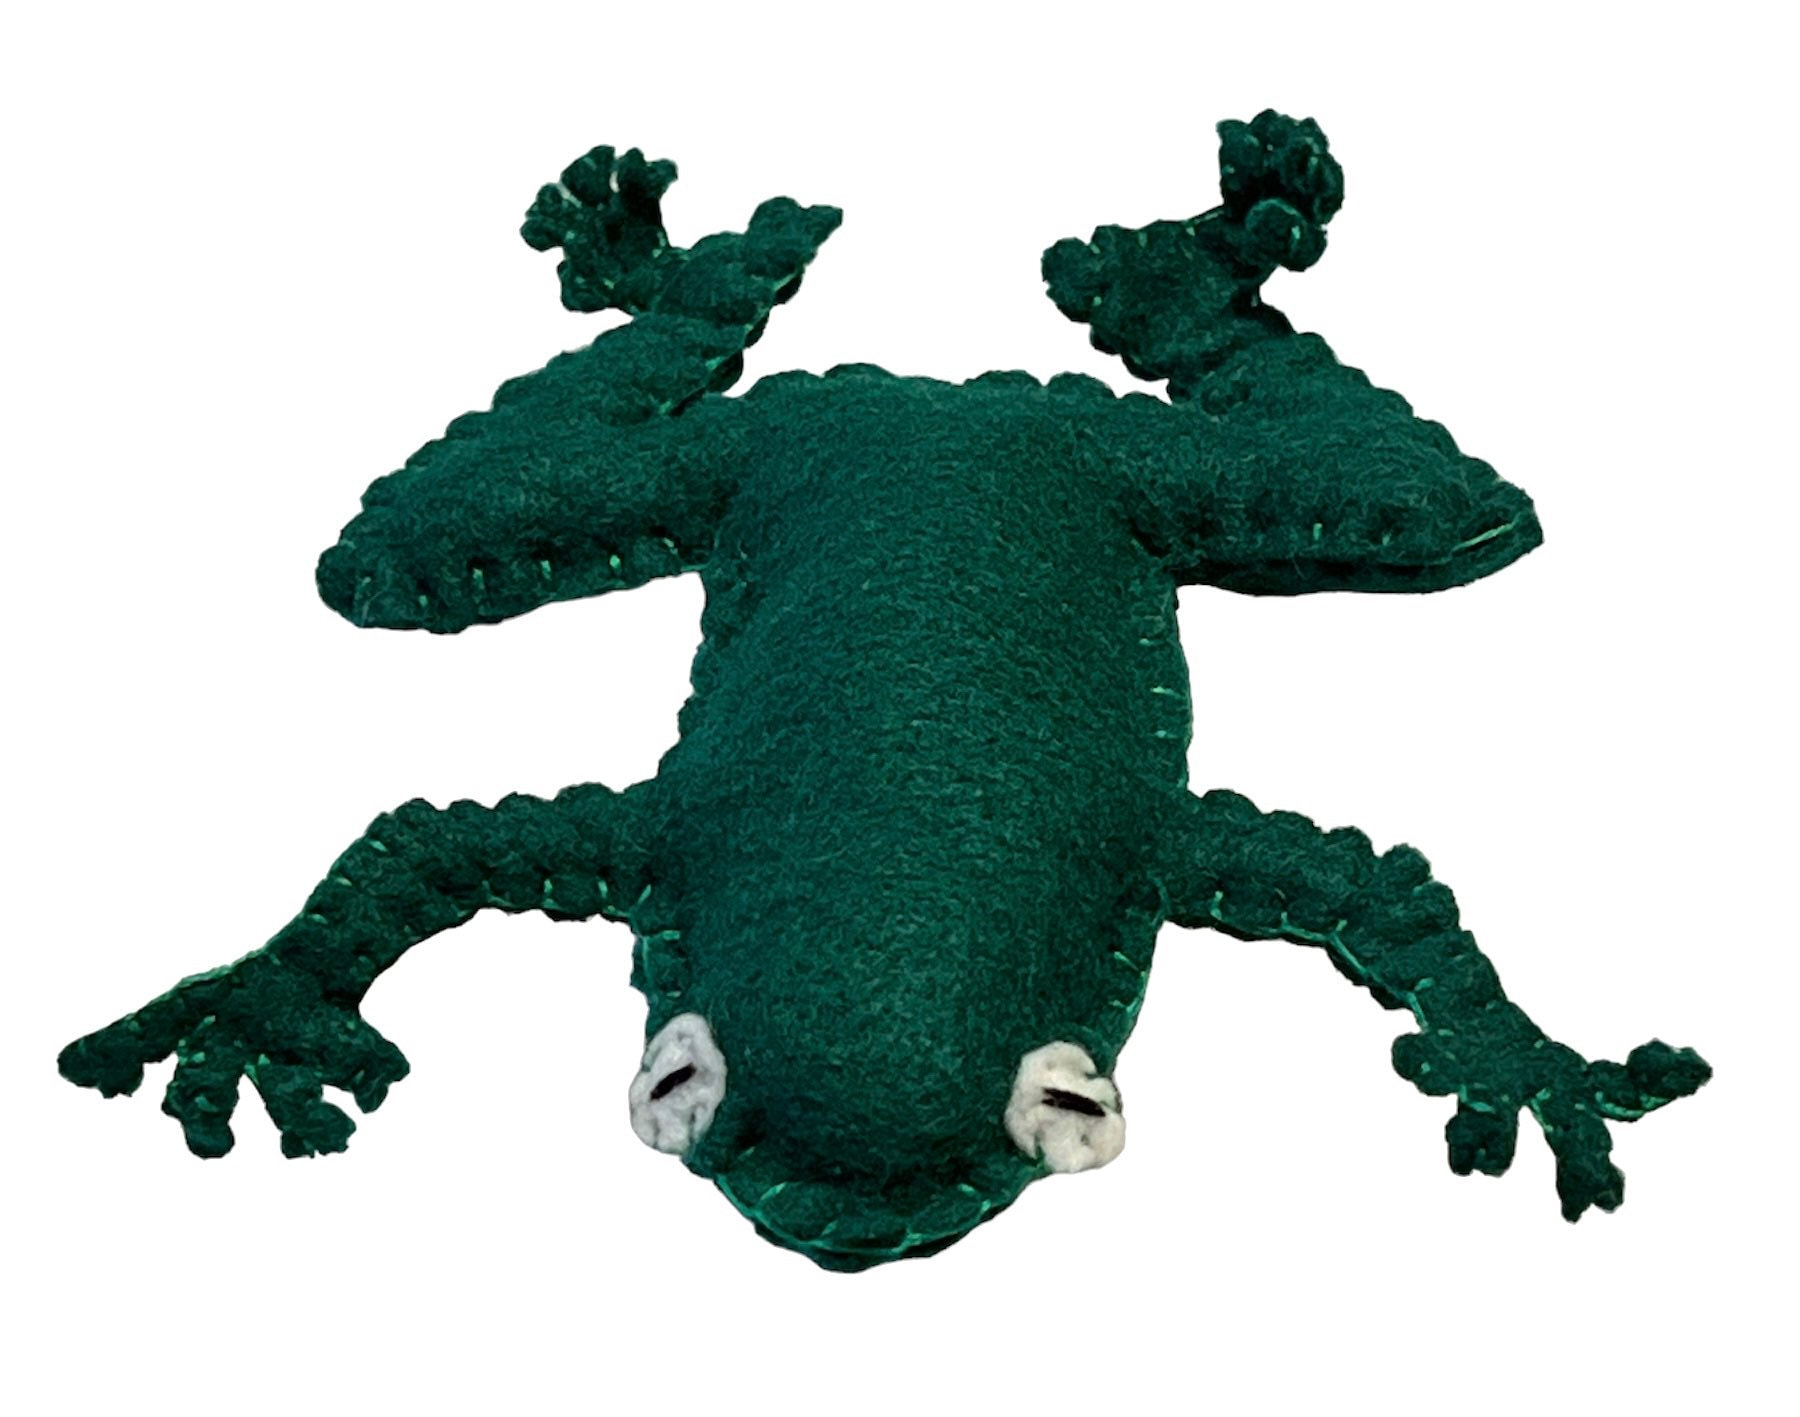 Robocat Cat Toy Frog 